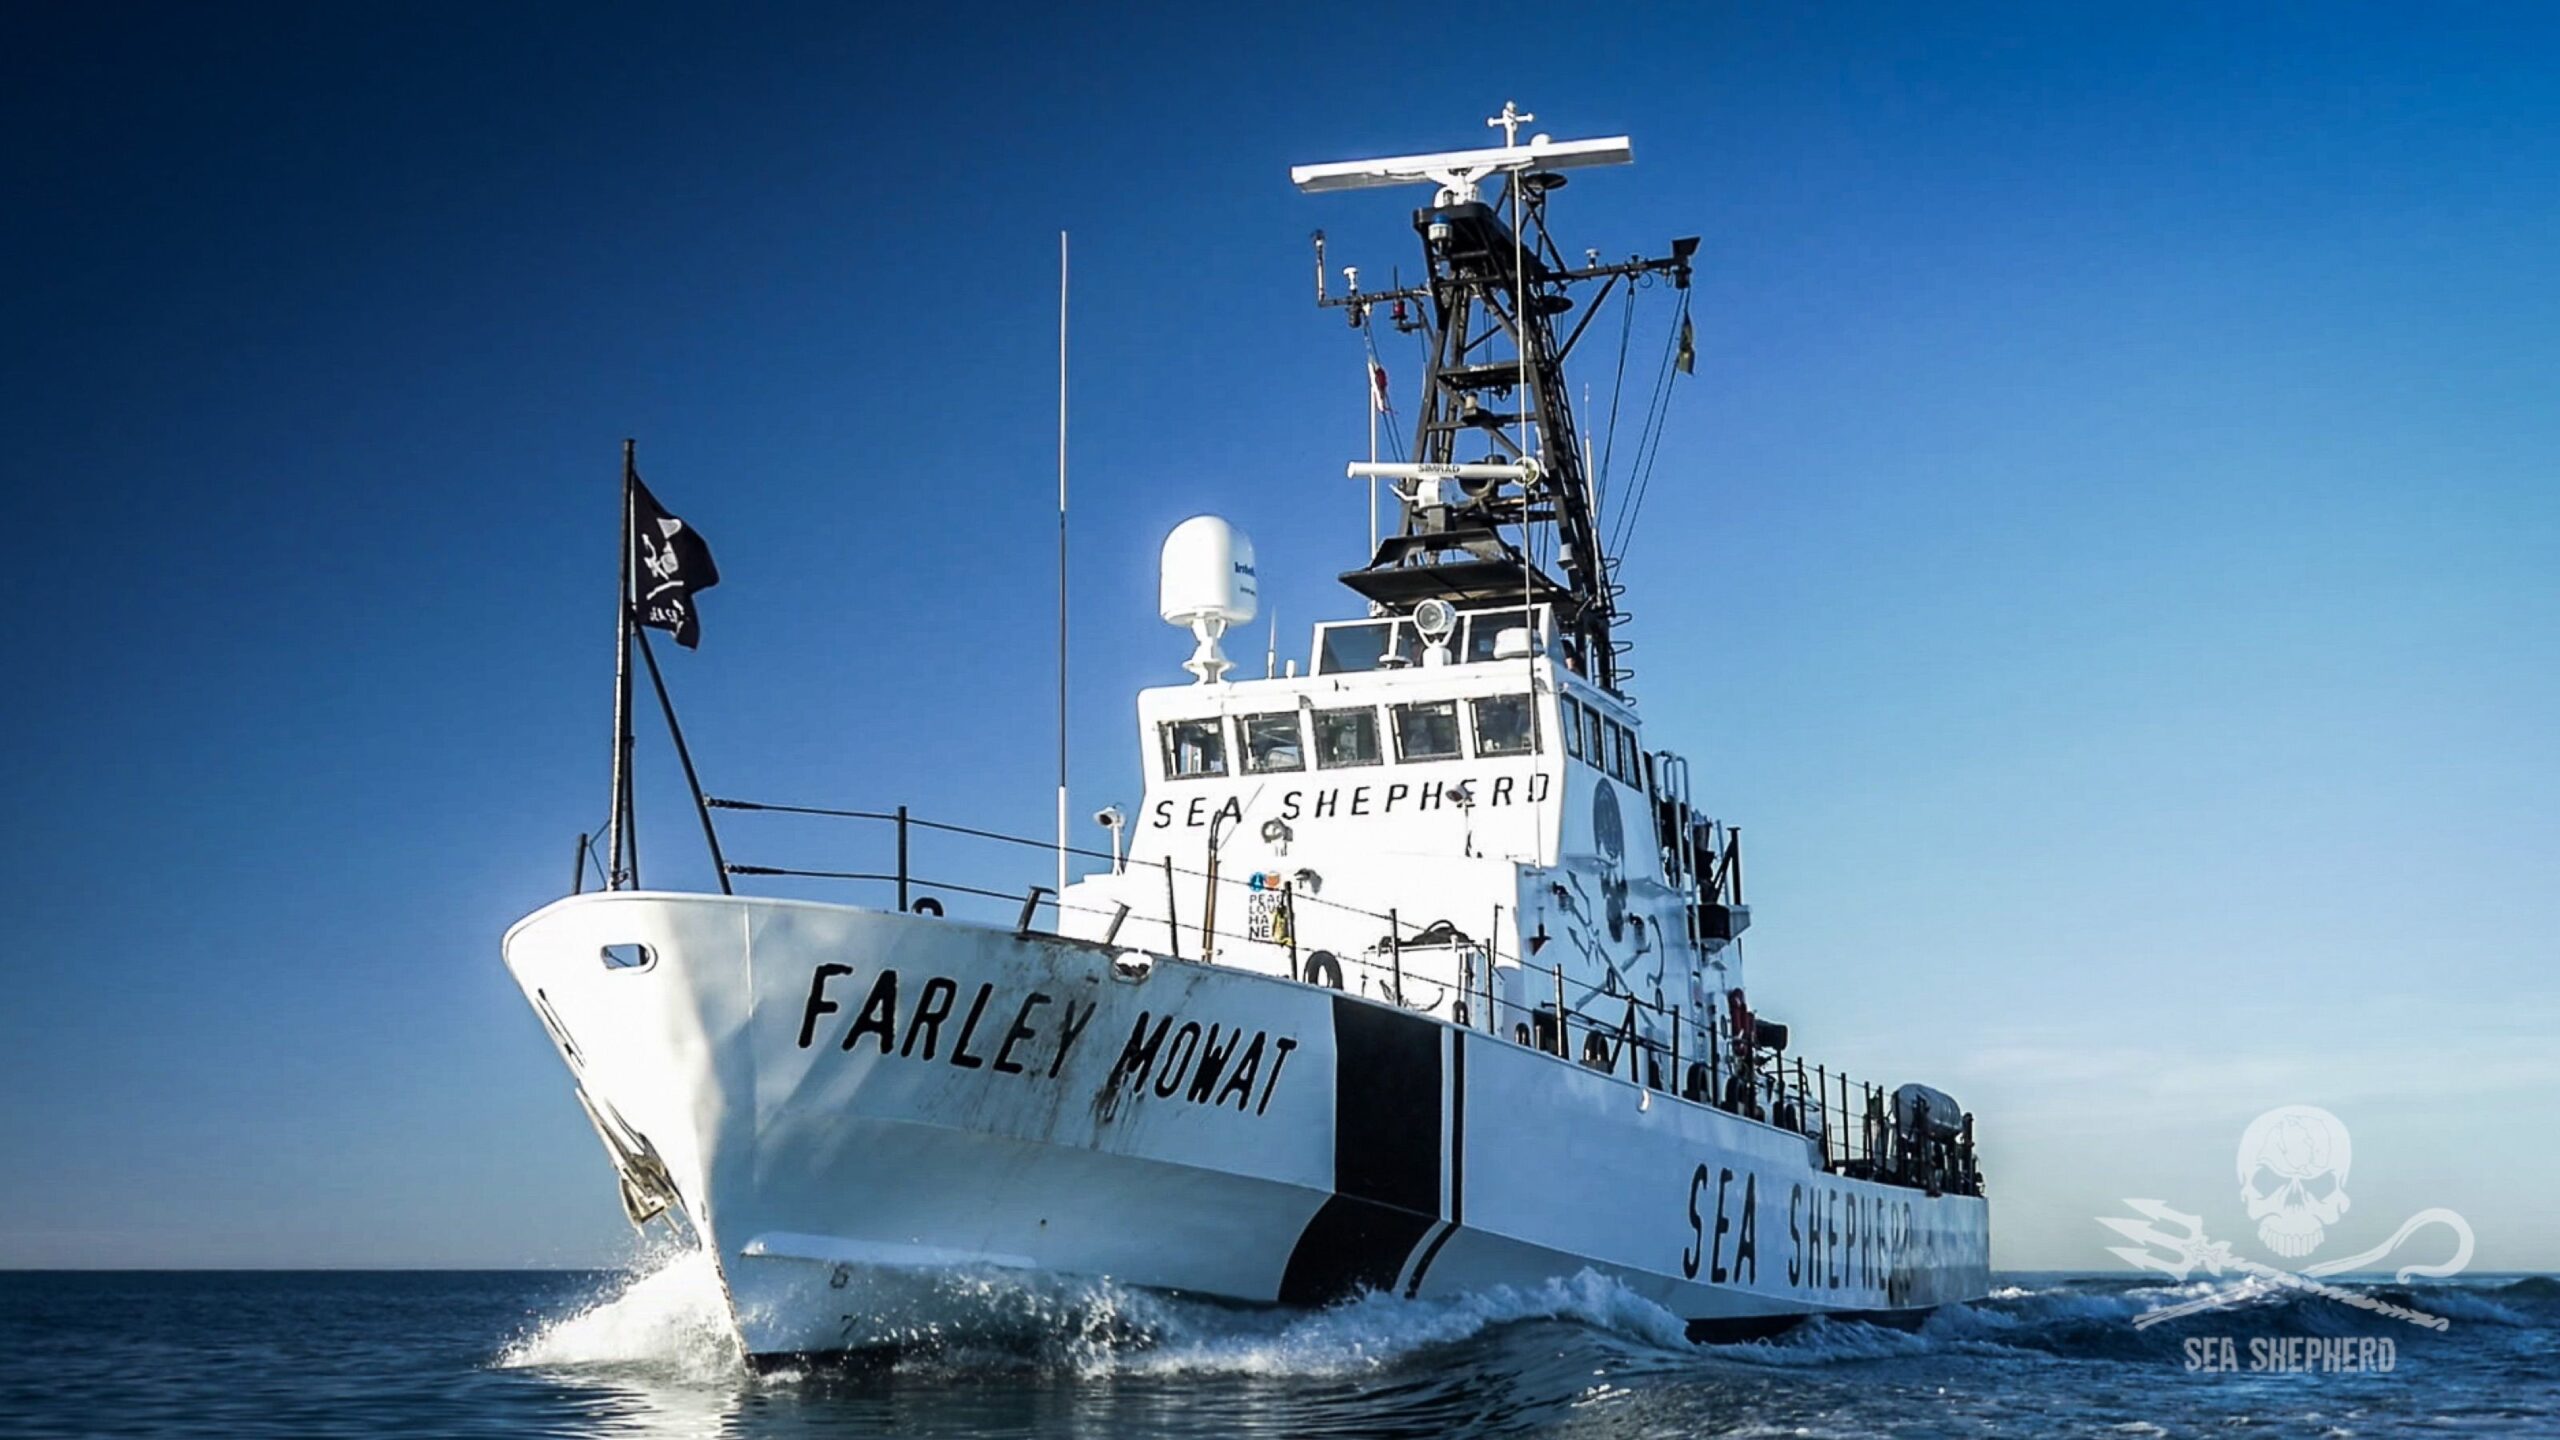 Sea Shepherd Fawley Mowat Sea of Cortez - Baja California Gulf - vaquita porpoise protection